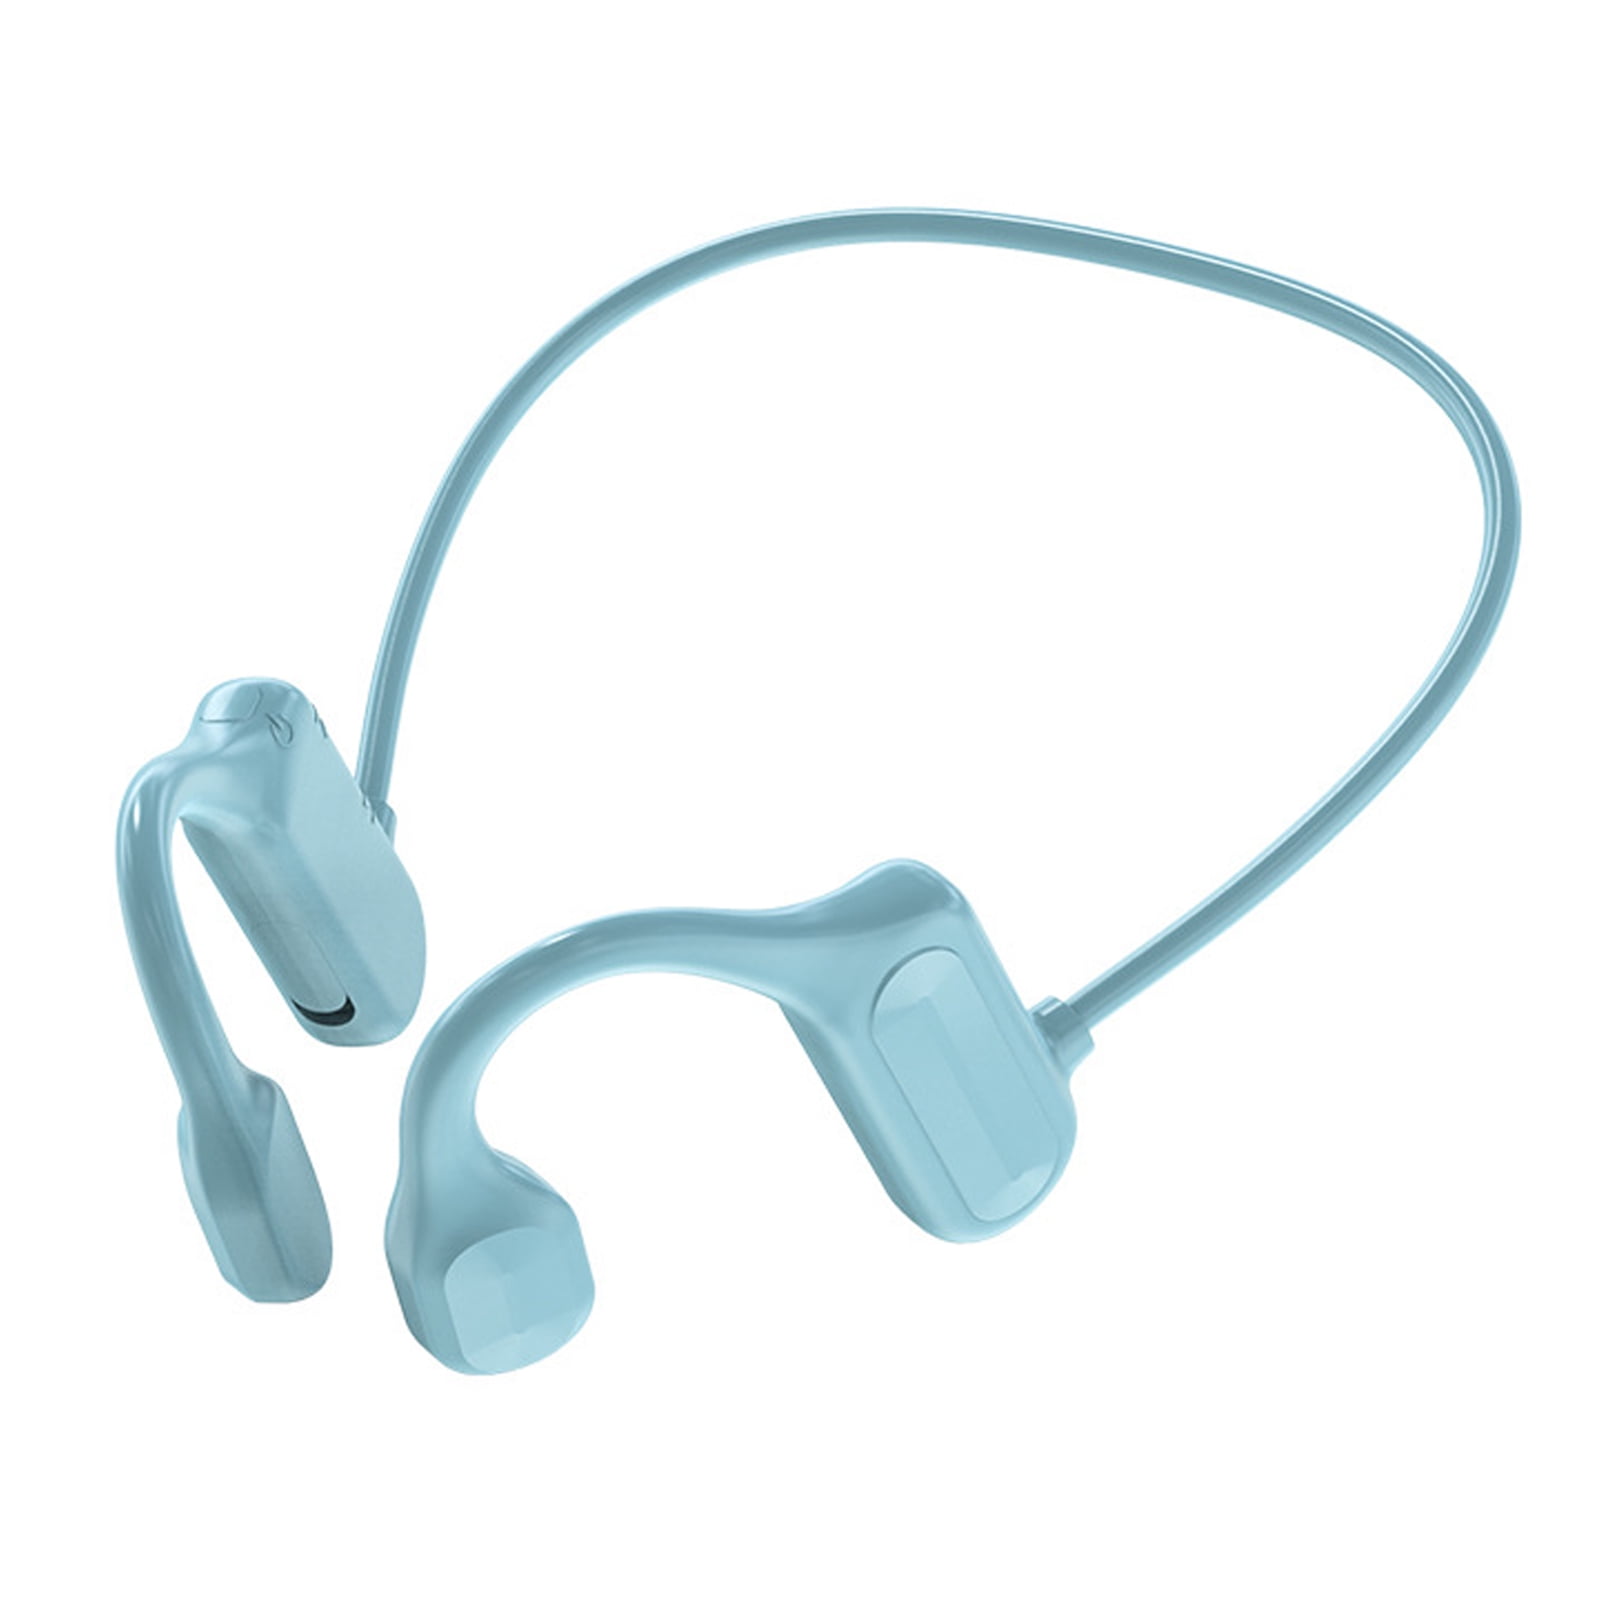 Bone Conduction Headphones Open-Ear Bluetooth Wireless Headphones